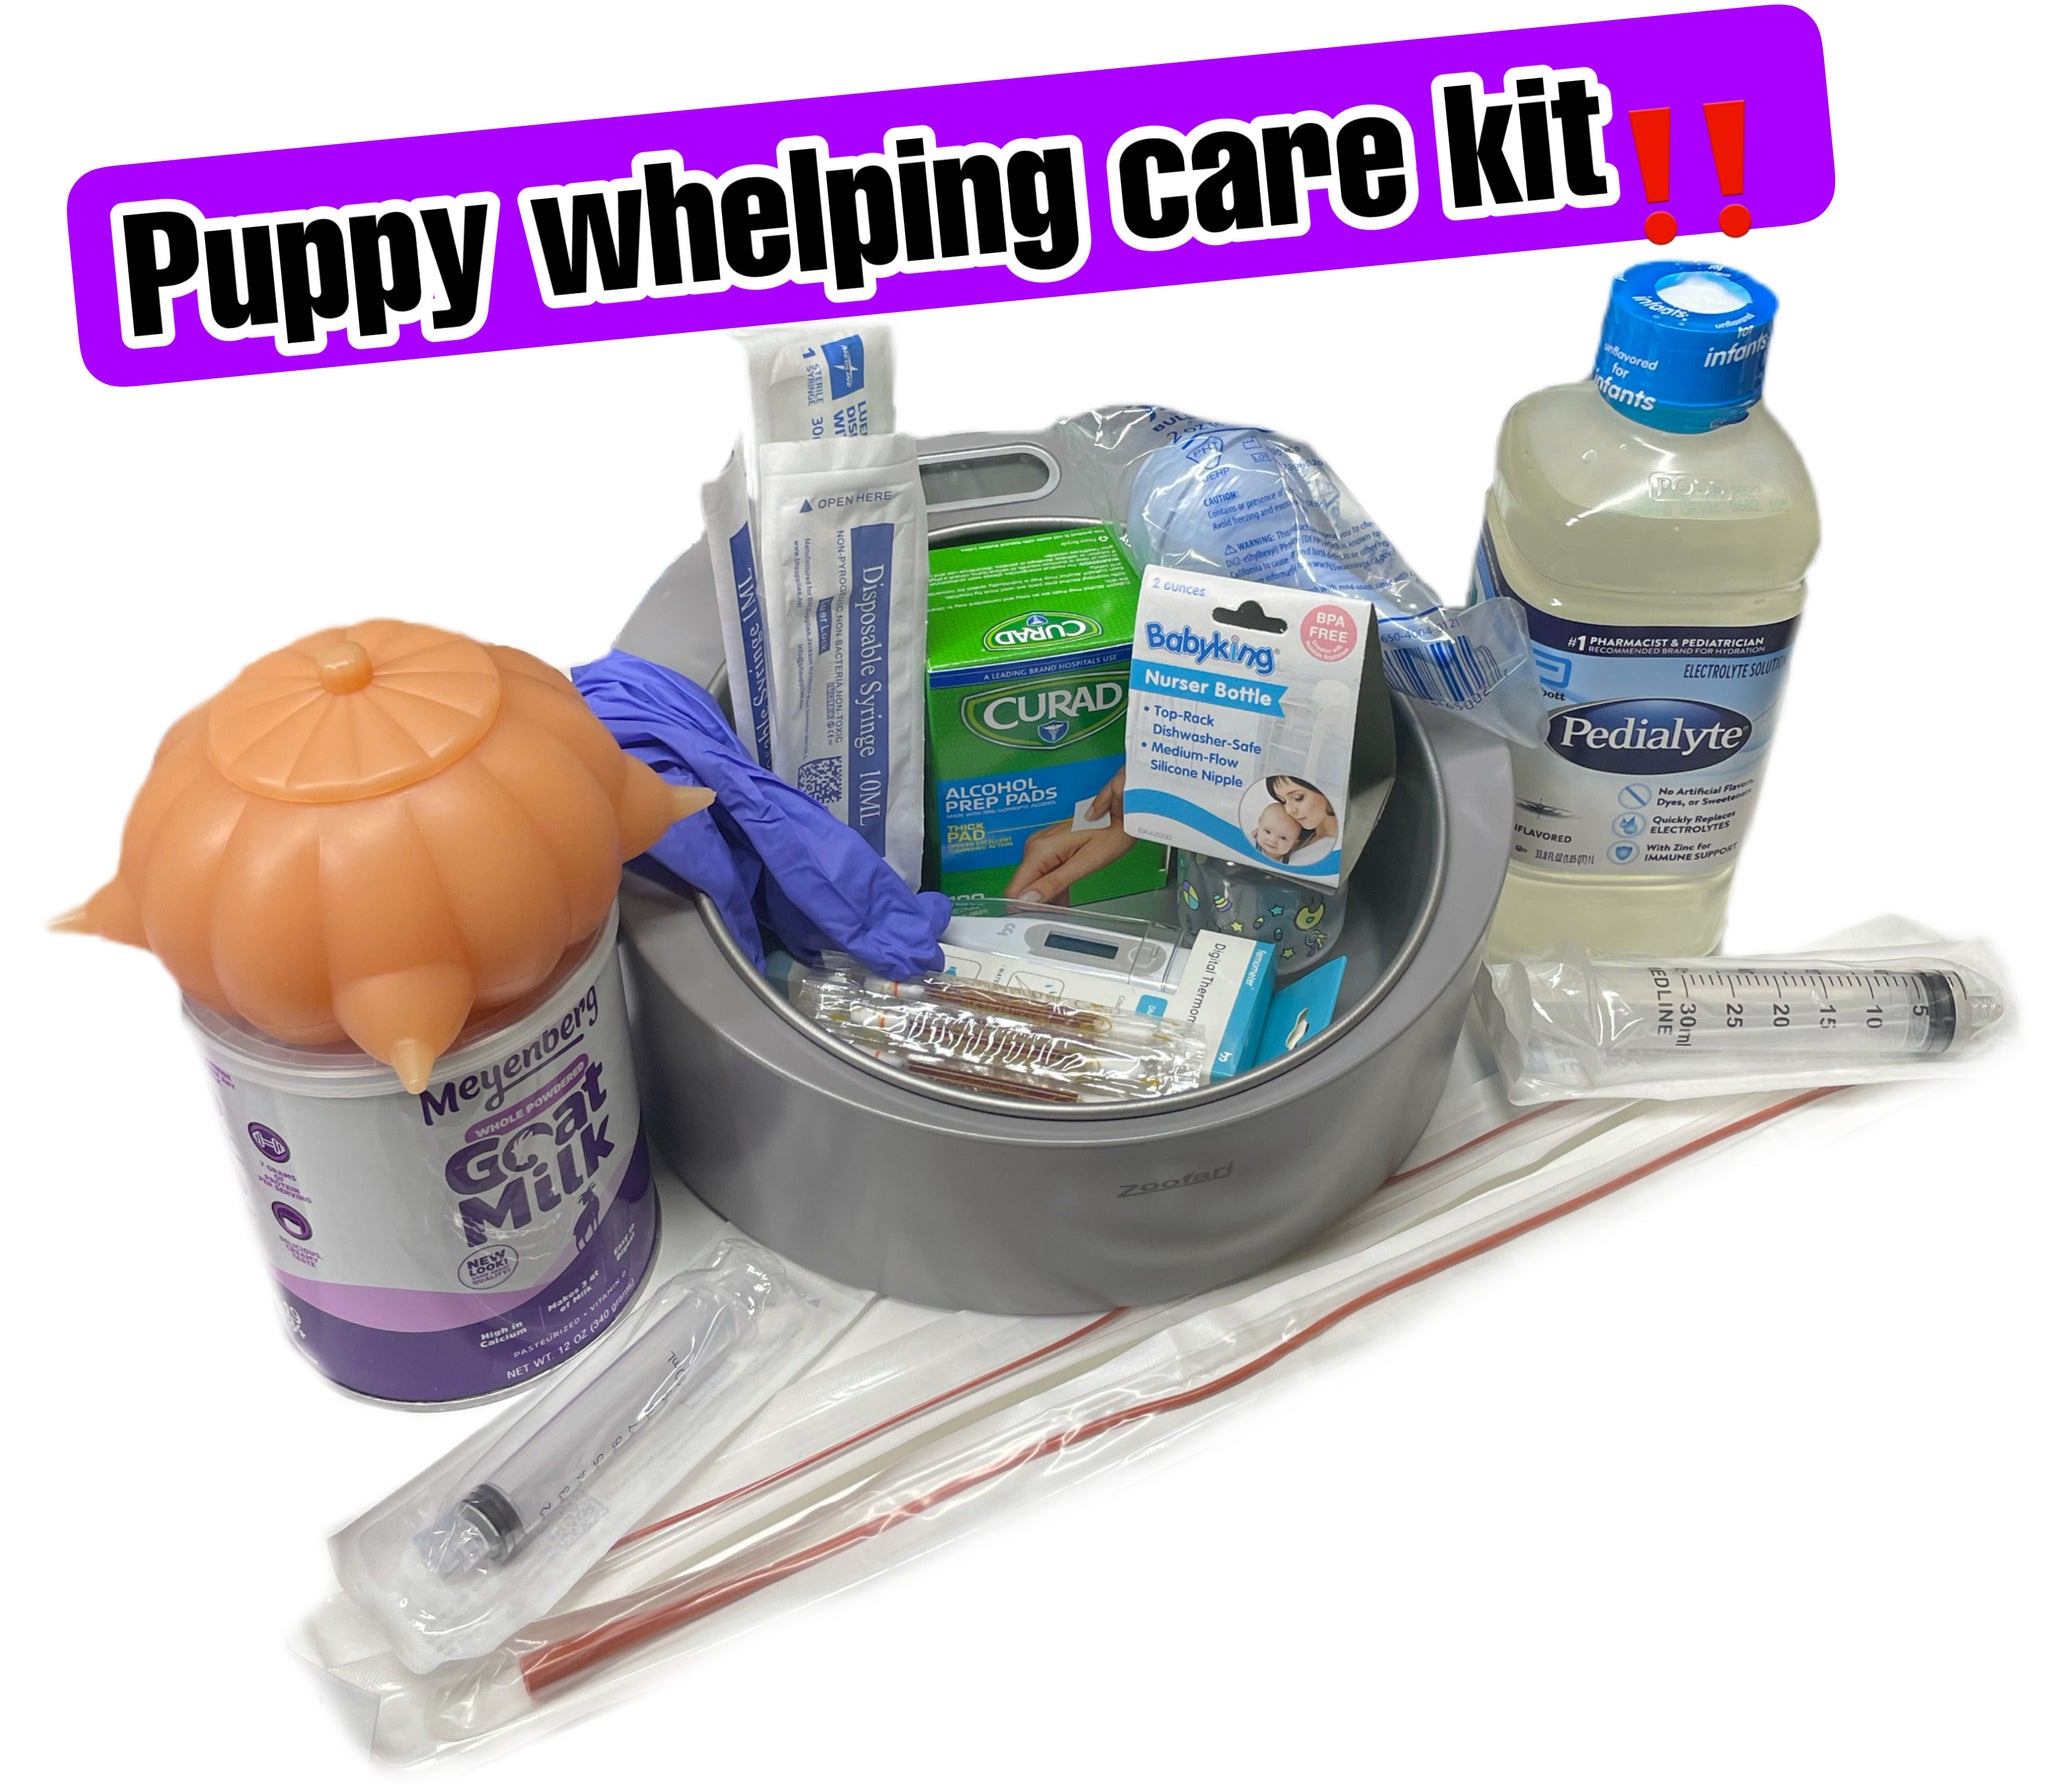 Whelping supplies checklist - goYo Pets, Whelping Box